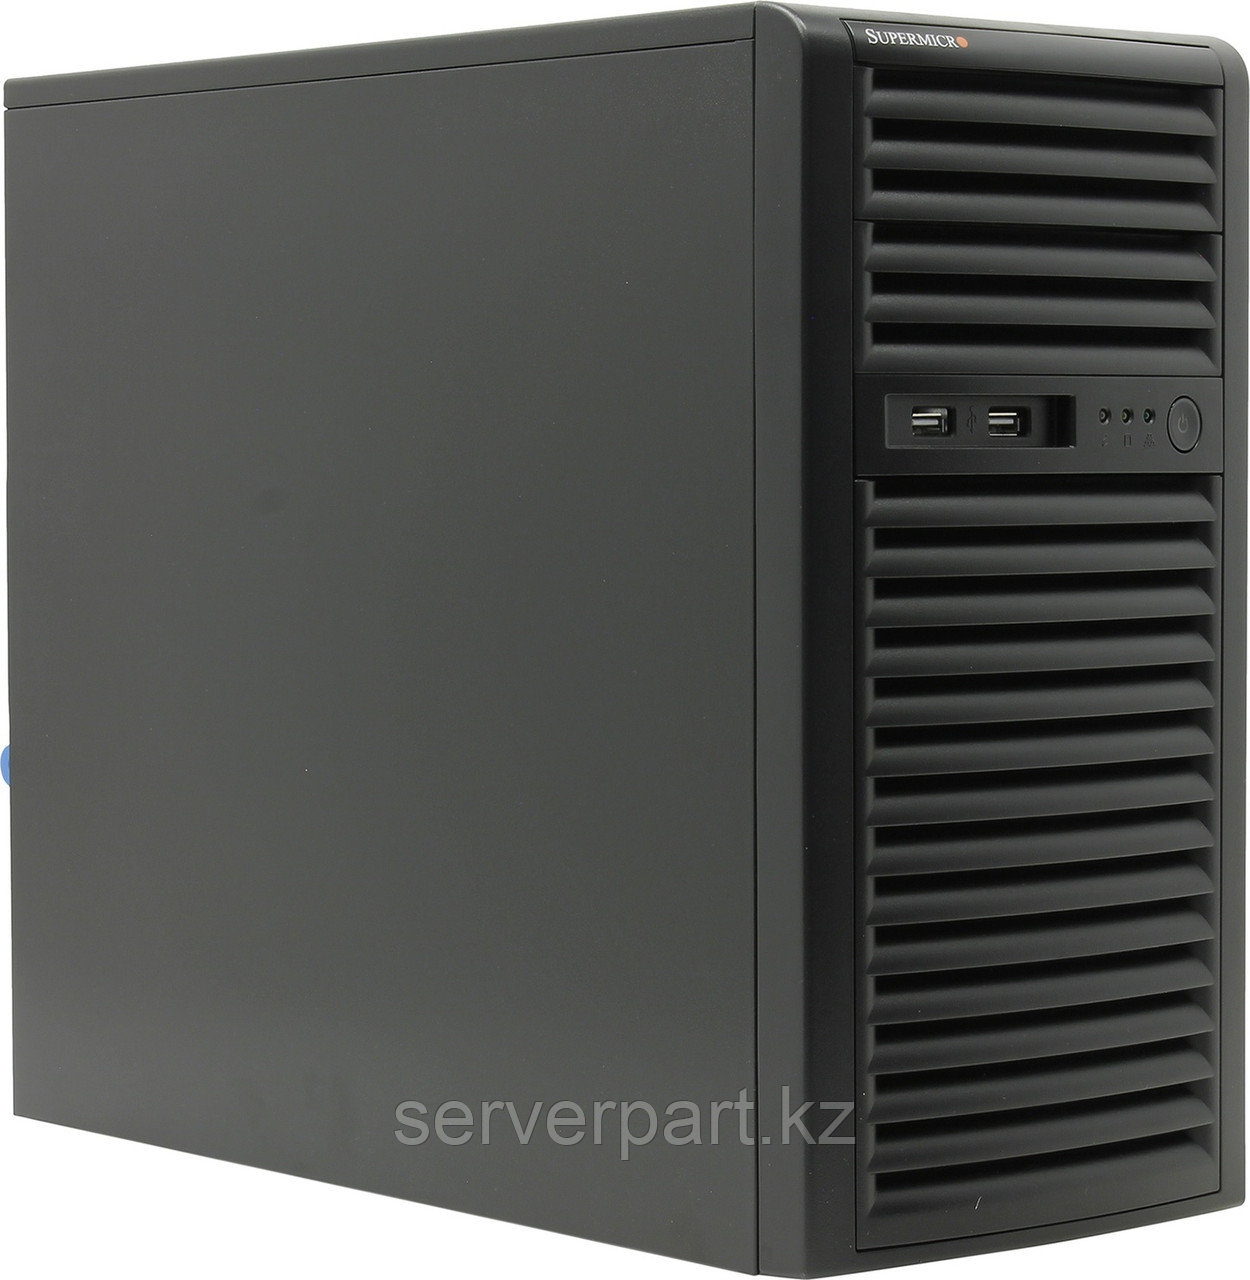 Сервер Supermicro SYS-5039D Tower/4-core intel xeon E3-1220v6 3GHz/32GB UDIMM nECC/1x240GB SSD RI Hyb